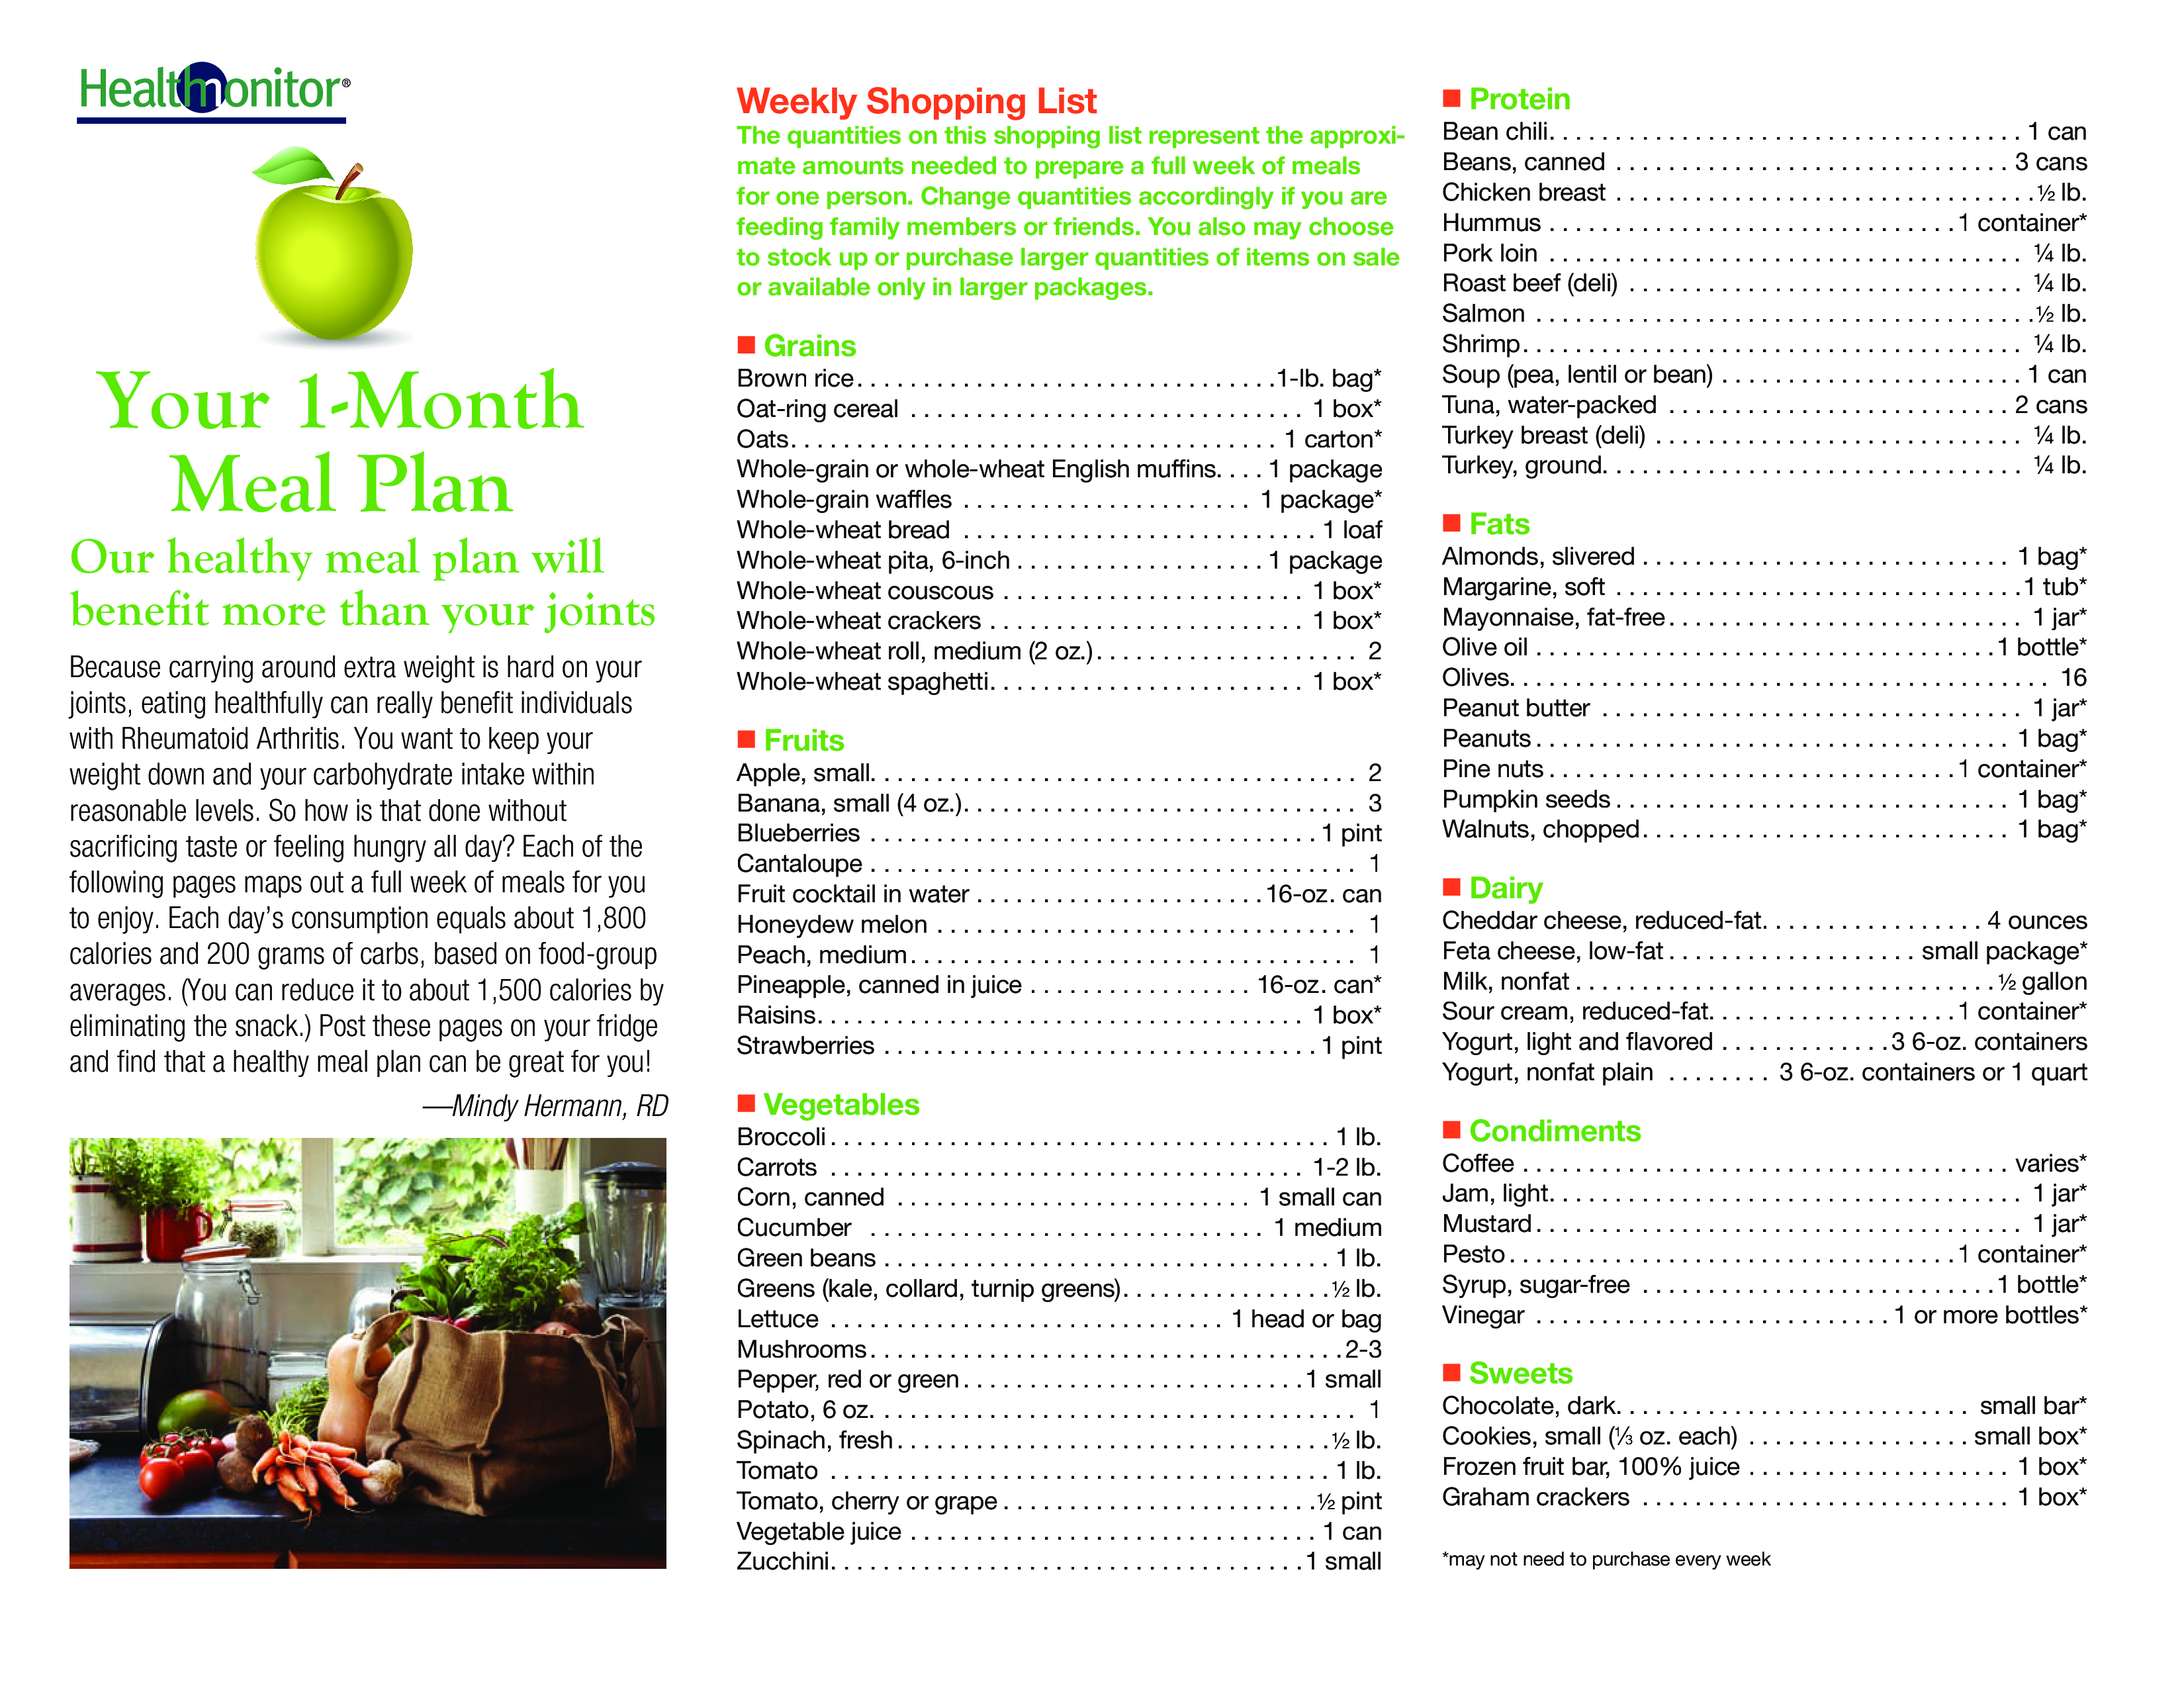 monthly meal calendar plantilla imagen principal